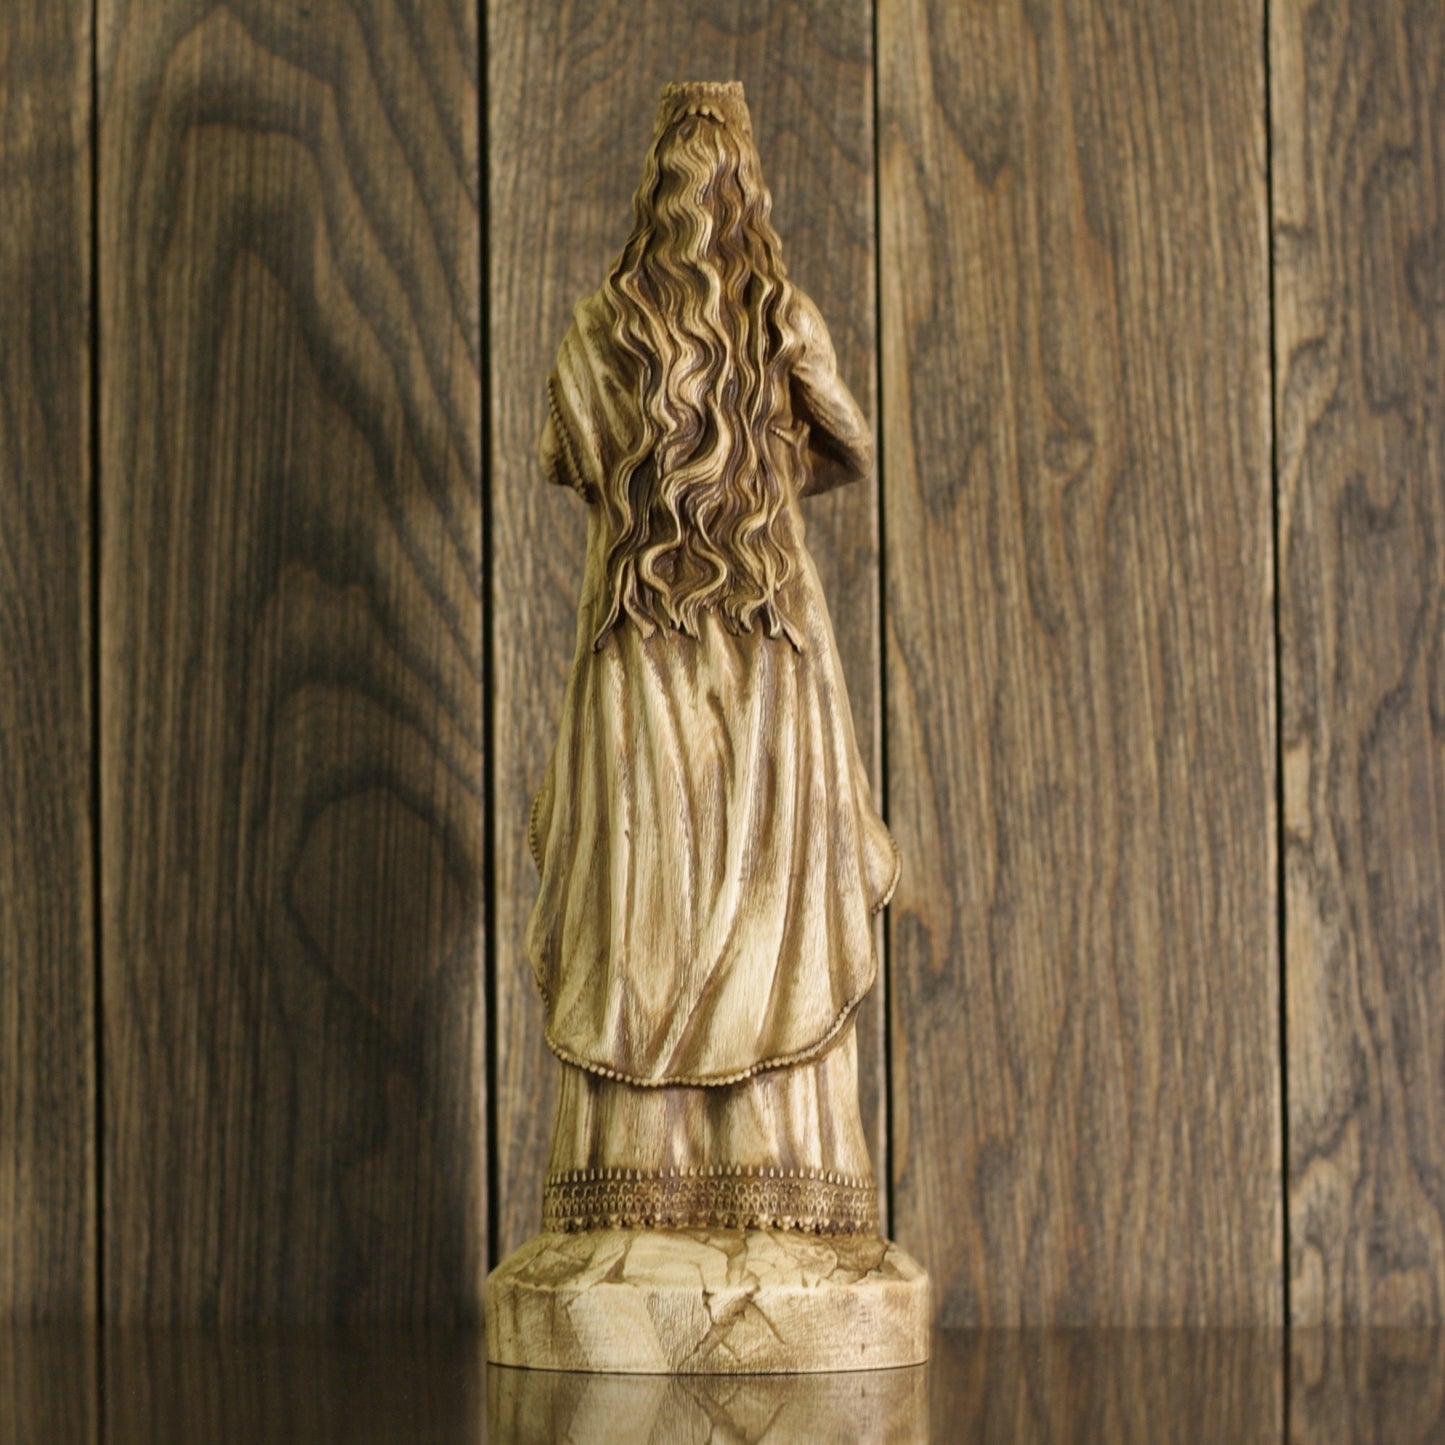 Sara La Kali Statue - Wooden Saint Sarah